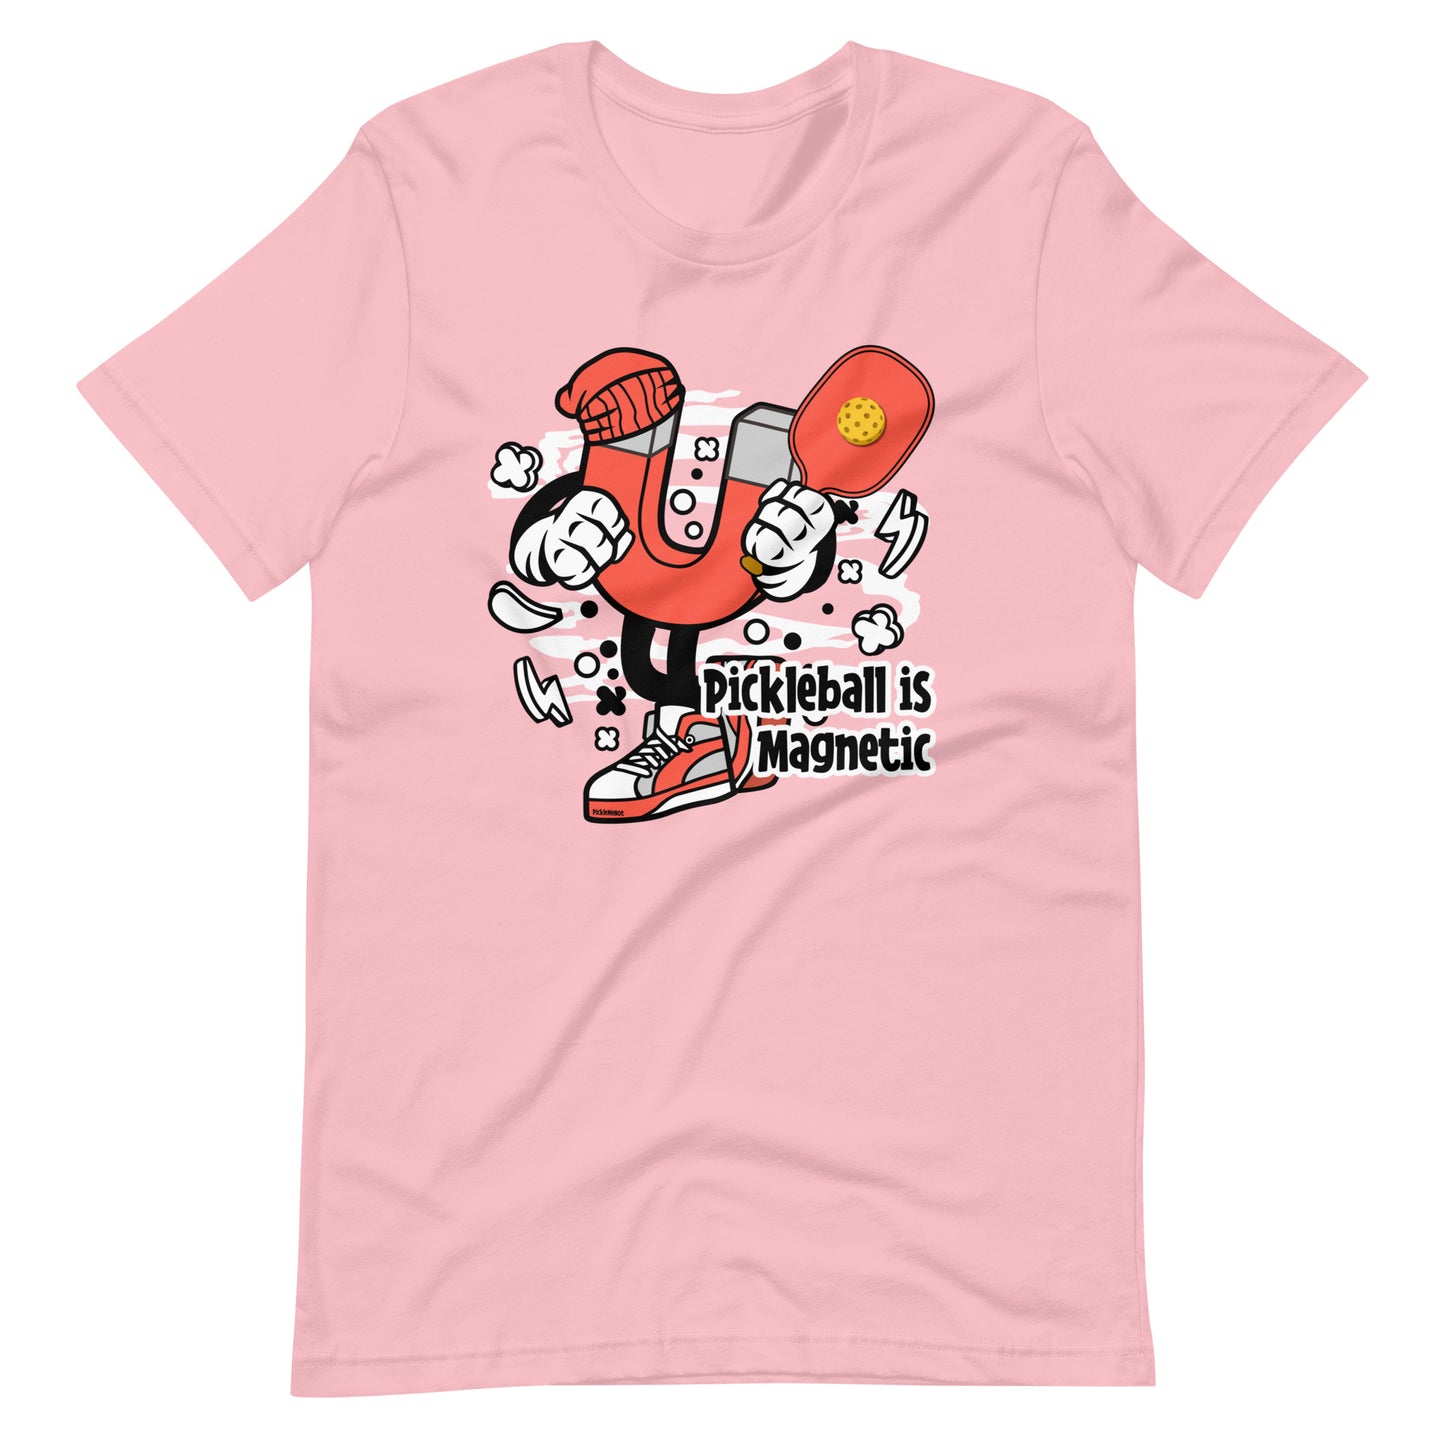 Retro-Vintage Fun Pickleball , "Pickleball is Magnetic" Unisex Women's Pink T-Shirt